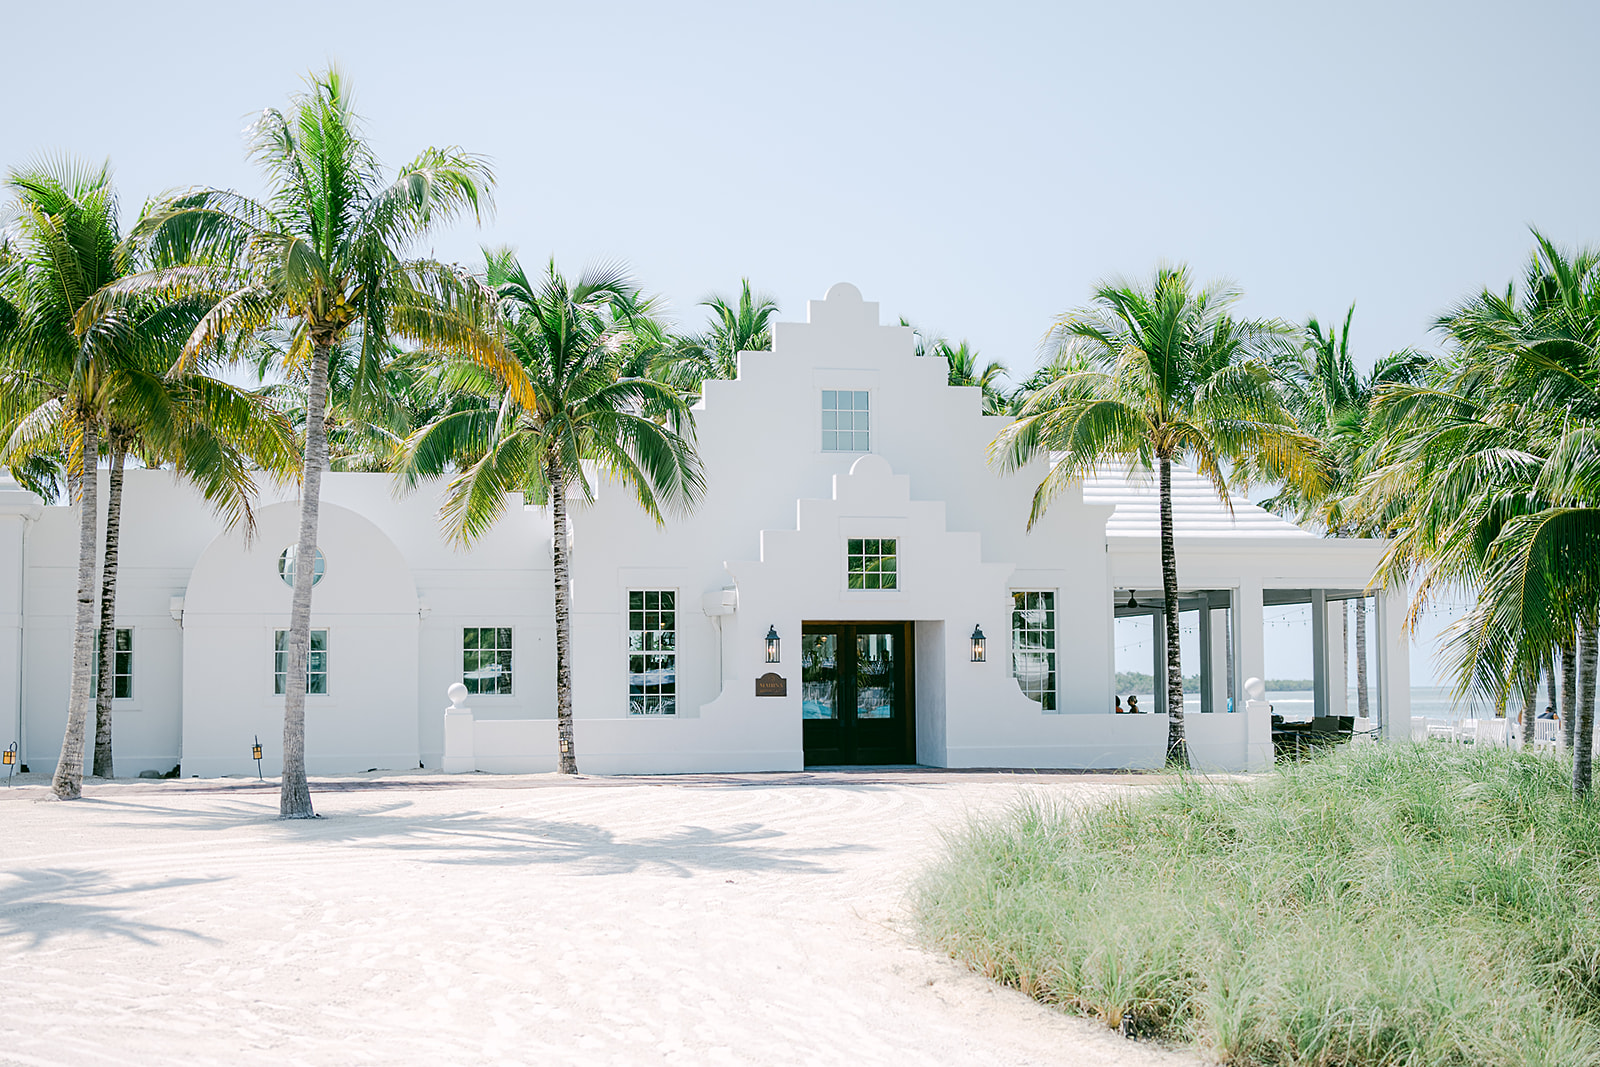 south florida wedding photographer captures Isla Bella beach resort wedding venue on a clear sunny day